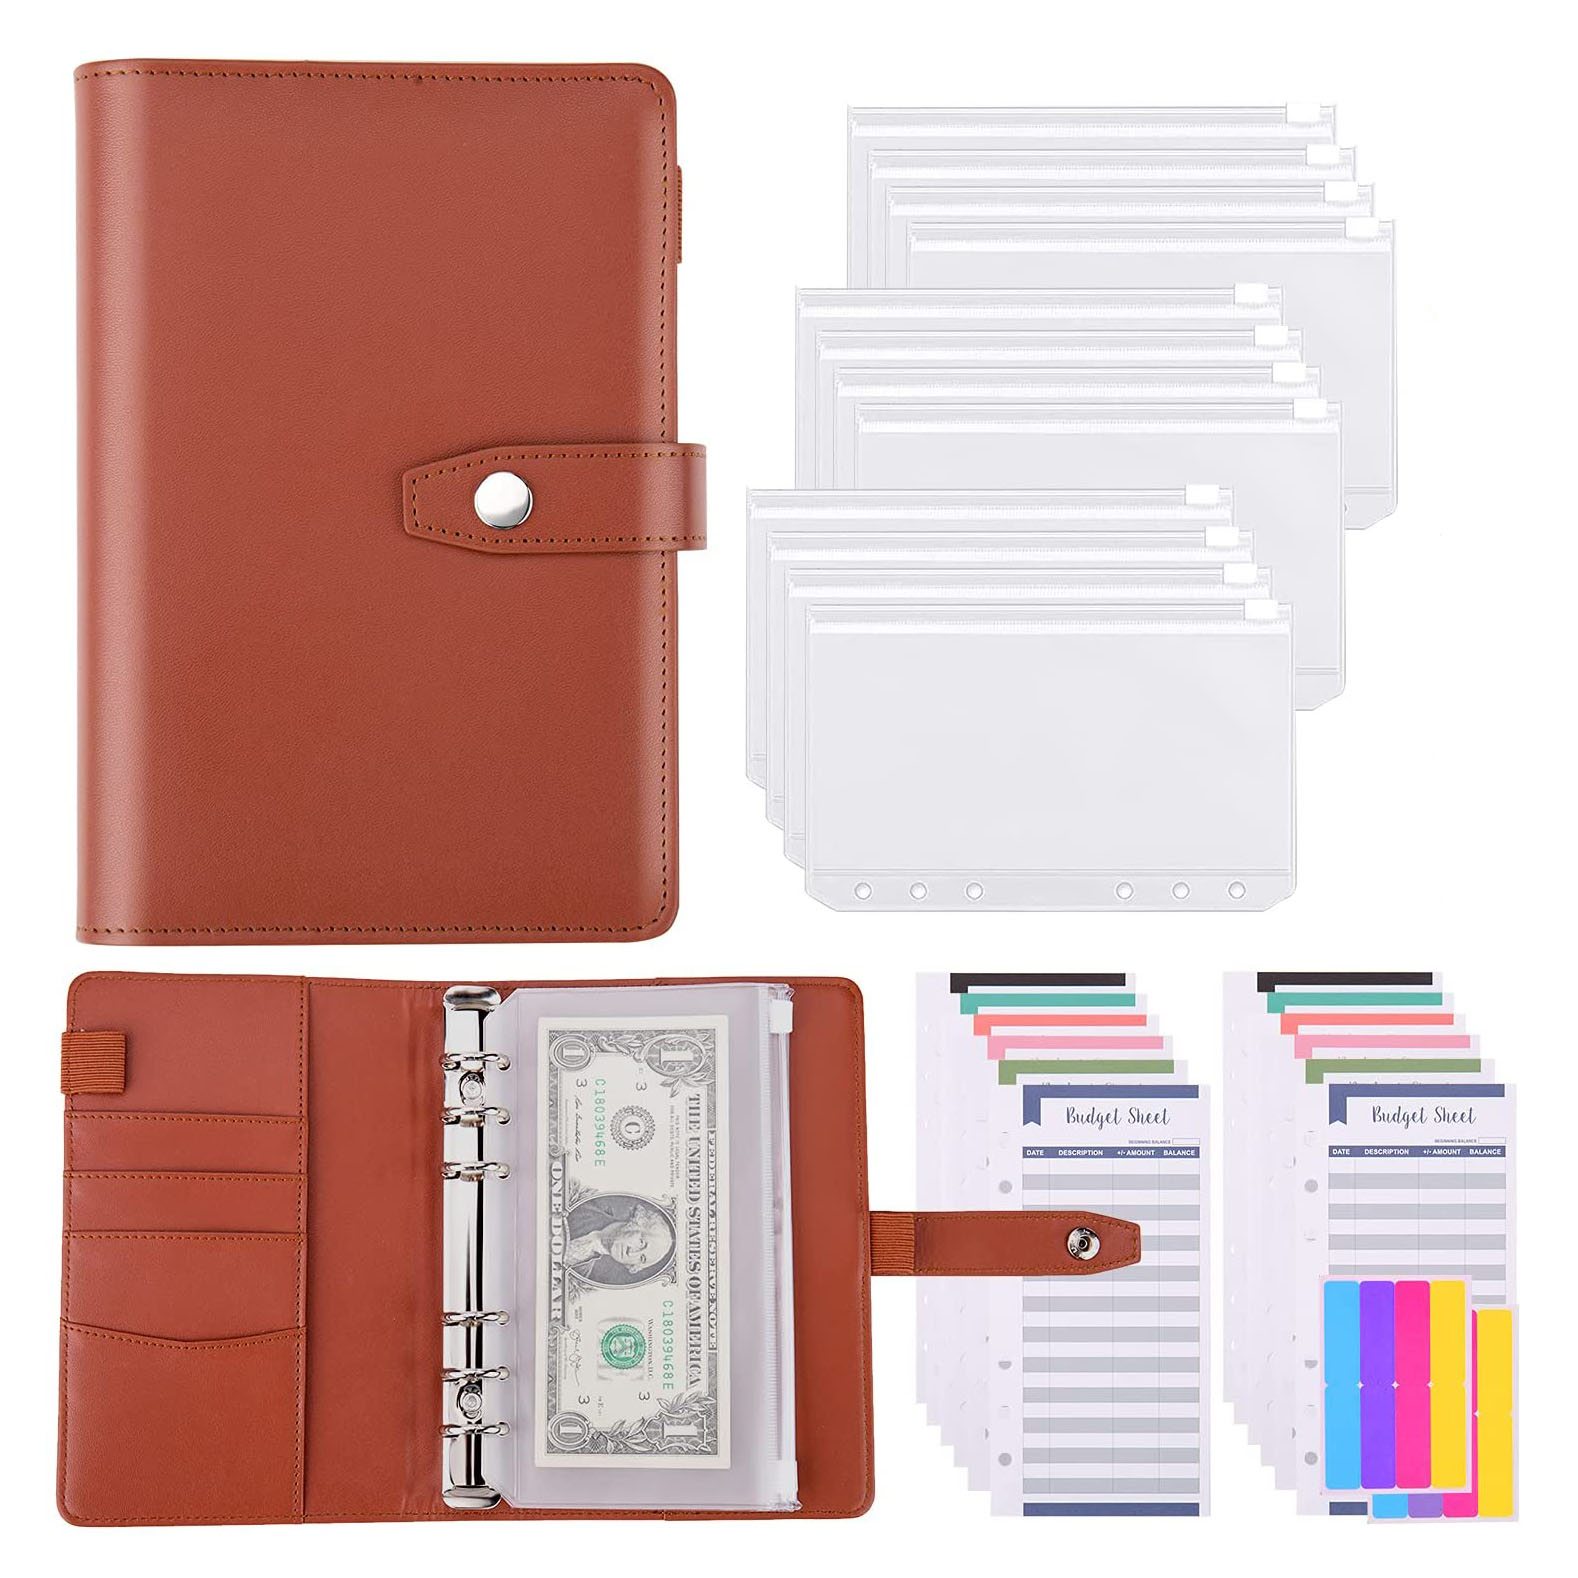 A6 PU Leather Budget Binder Organizer12PCS Budget Envelopes,12 Budget Sheets 2 Sticker Sheets Money Saving for Budgeting